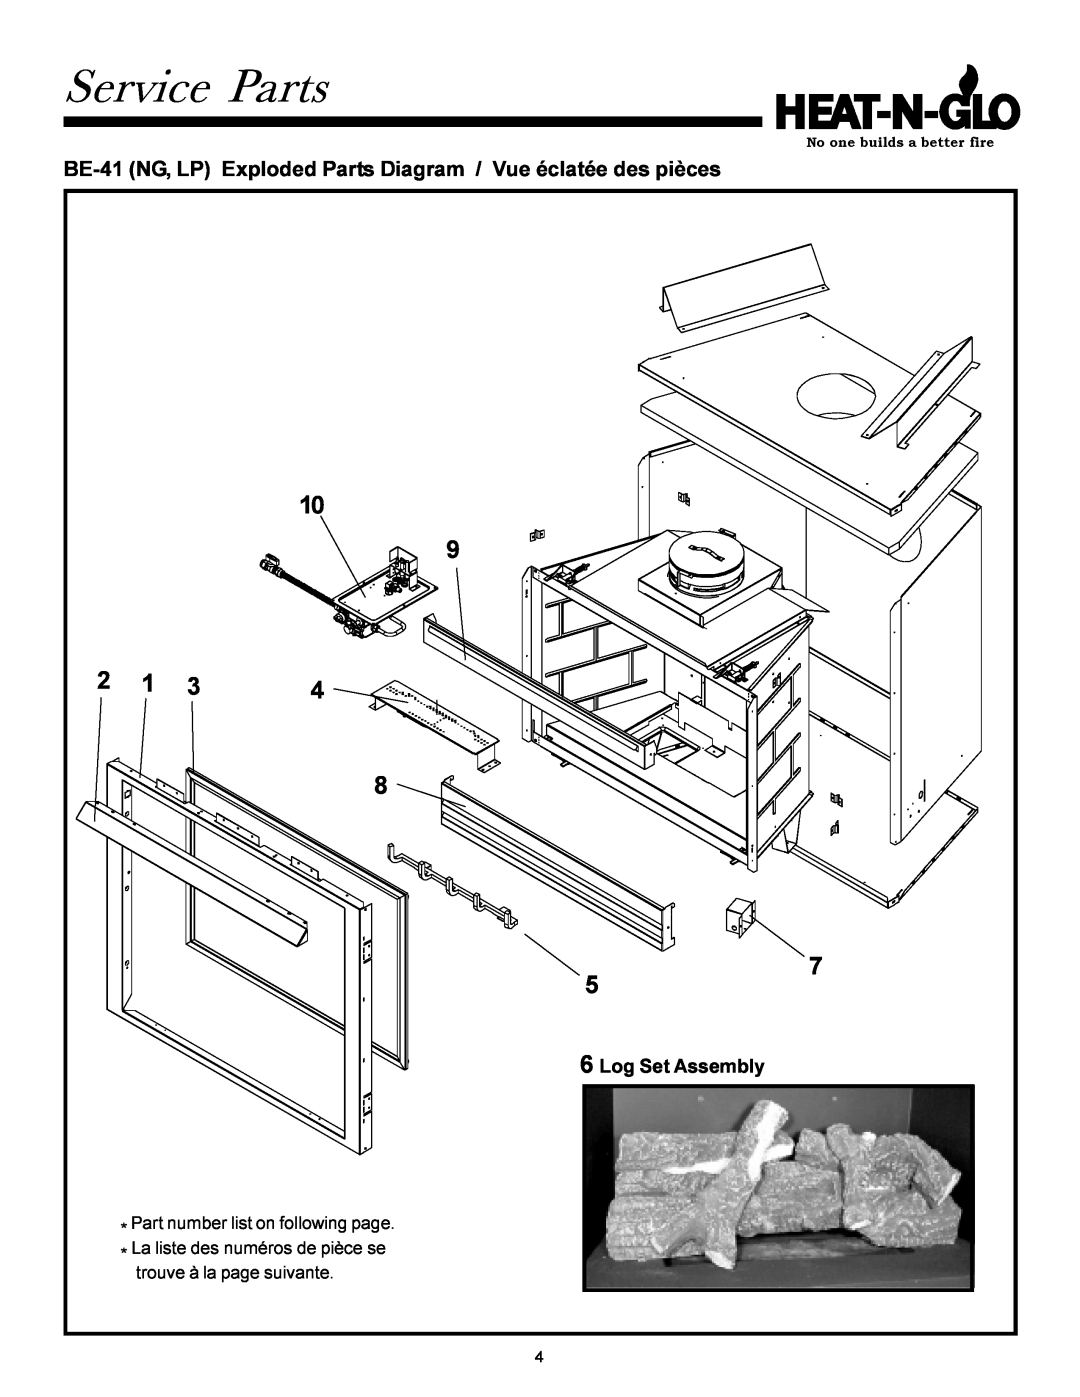 Heat & Glo LifeStyle BE-41 manual Service Parts, Log Set Assembly 